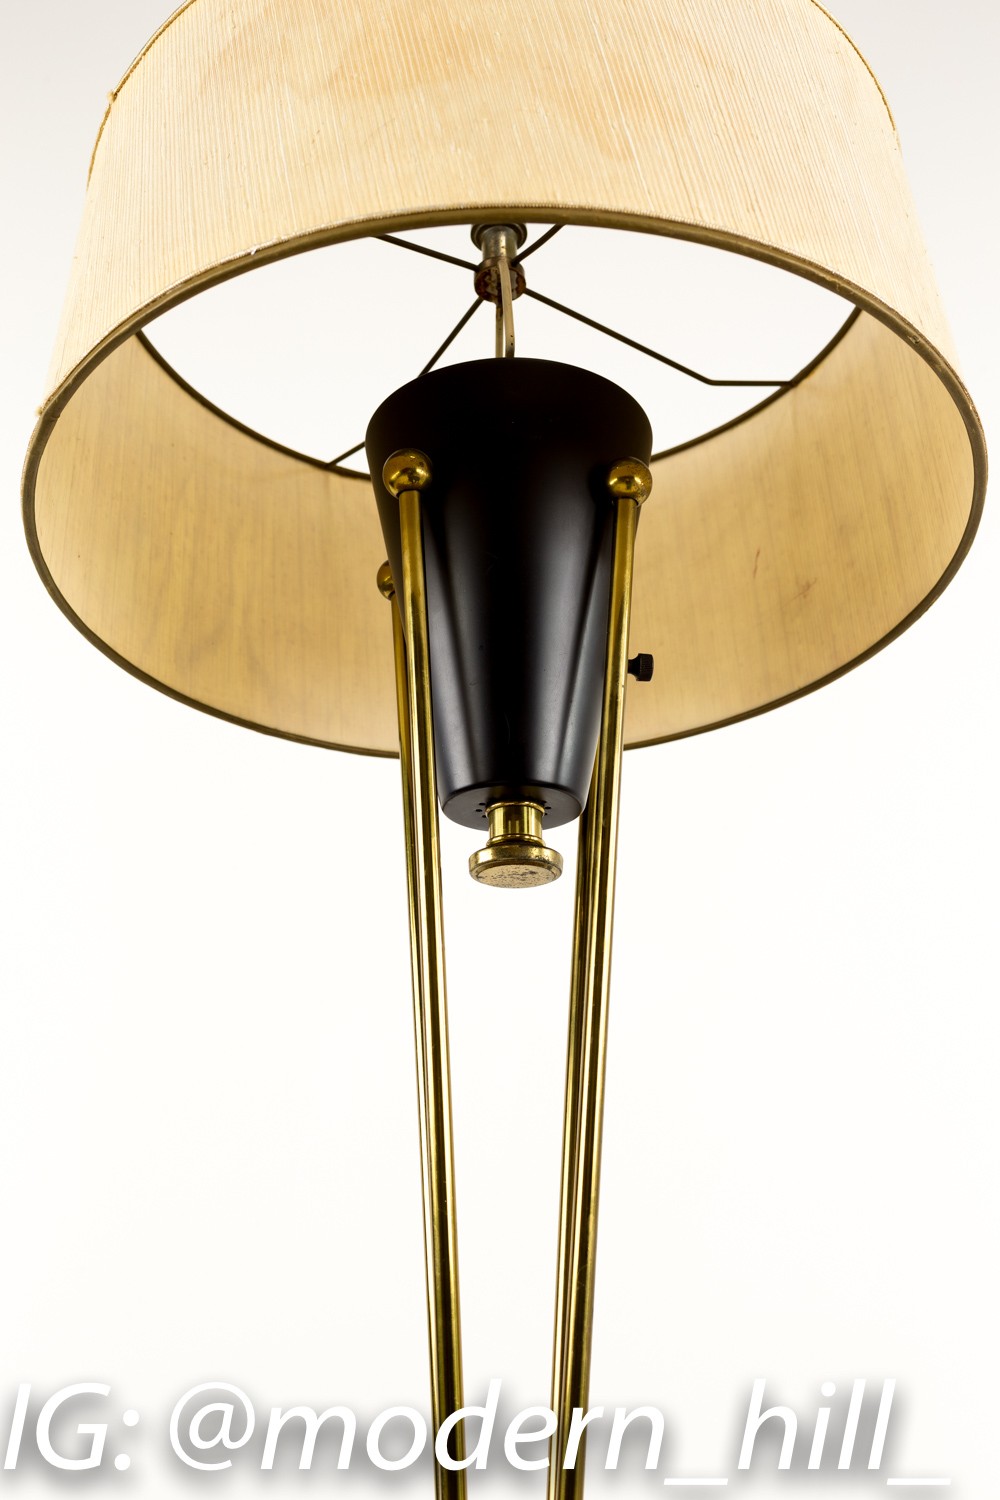 Gerald Thurston for Stiffel Mid-century Modern Table Lamp